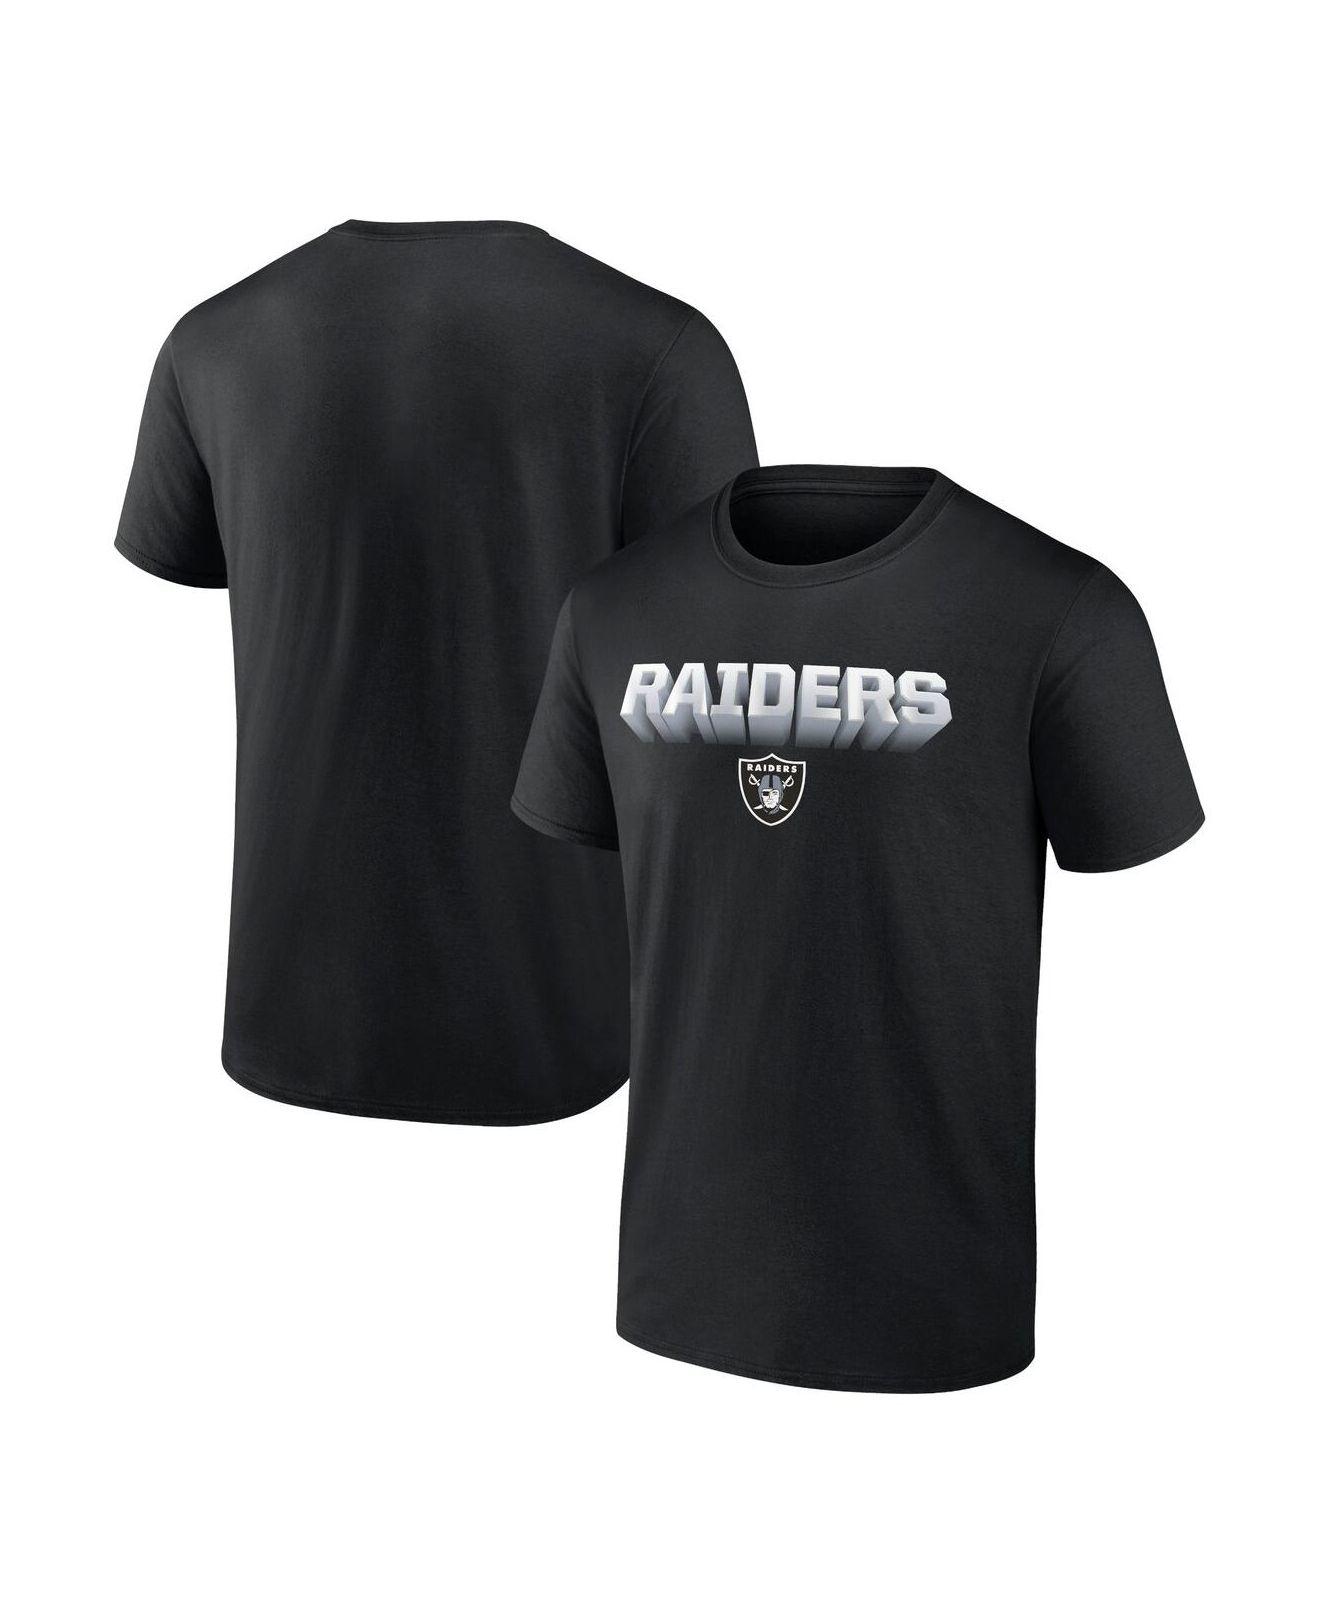 Men's Fanatics Branded Black/Heathered Gray Las Vegas Raiders T-Shirt Combo  Pack